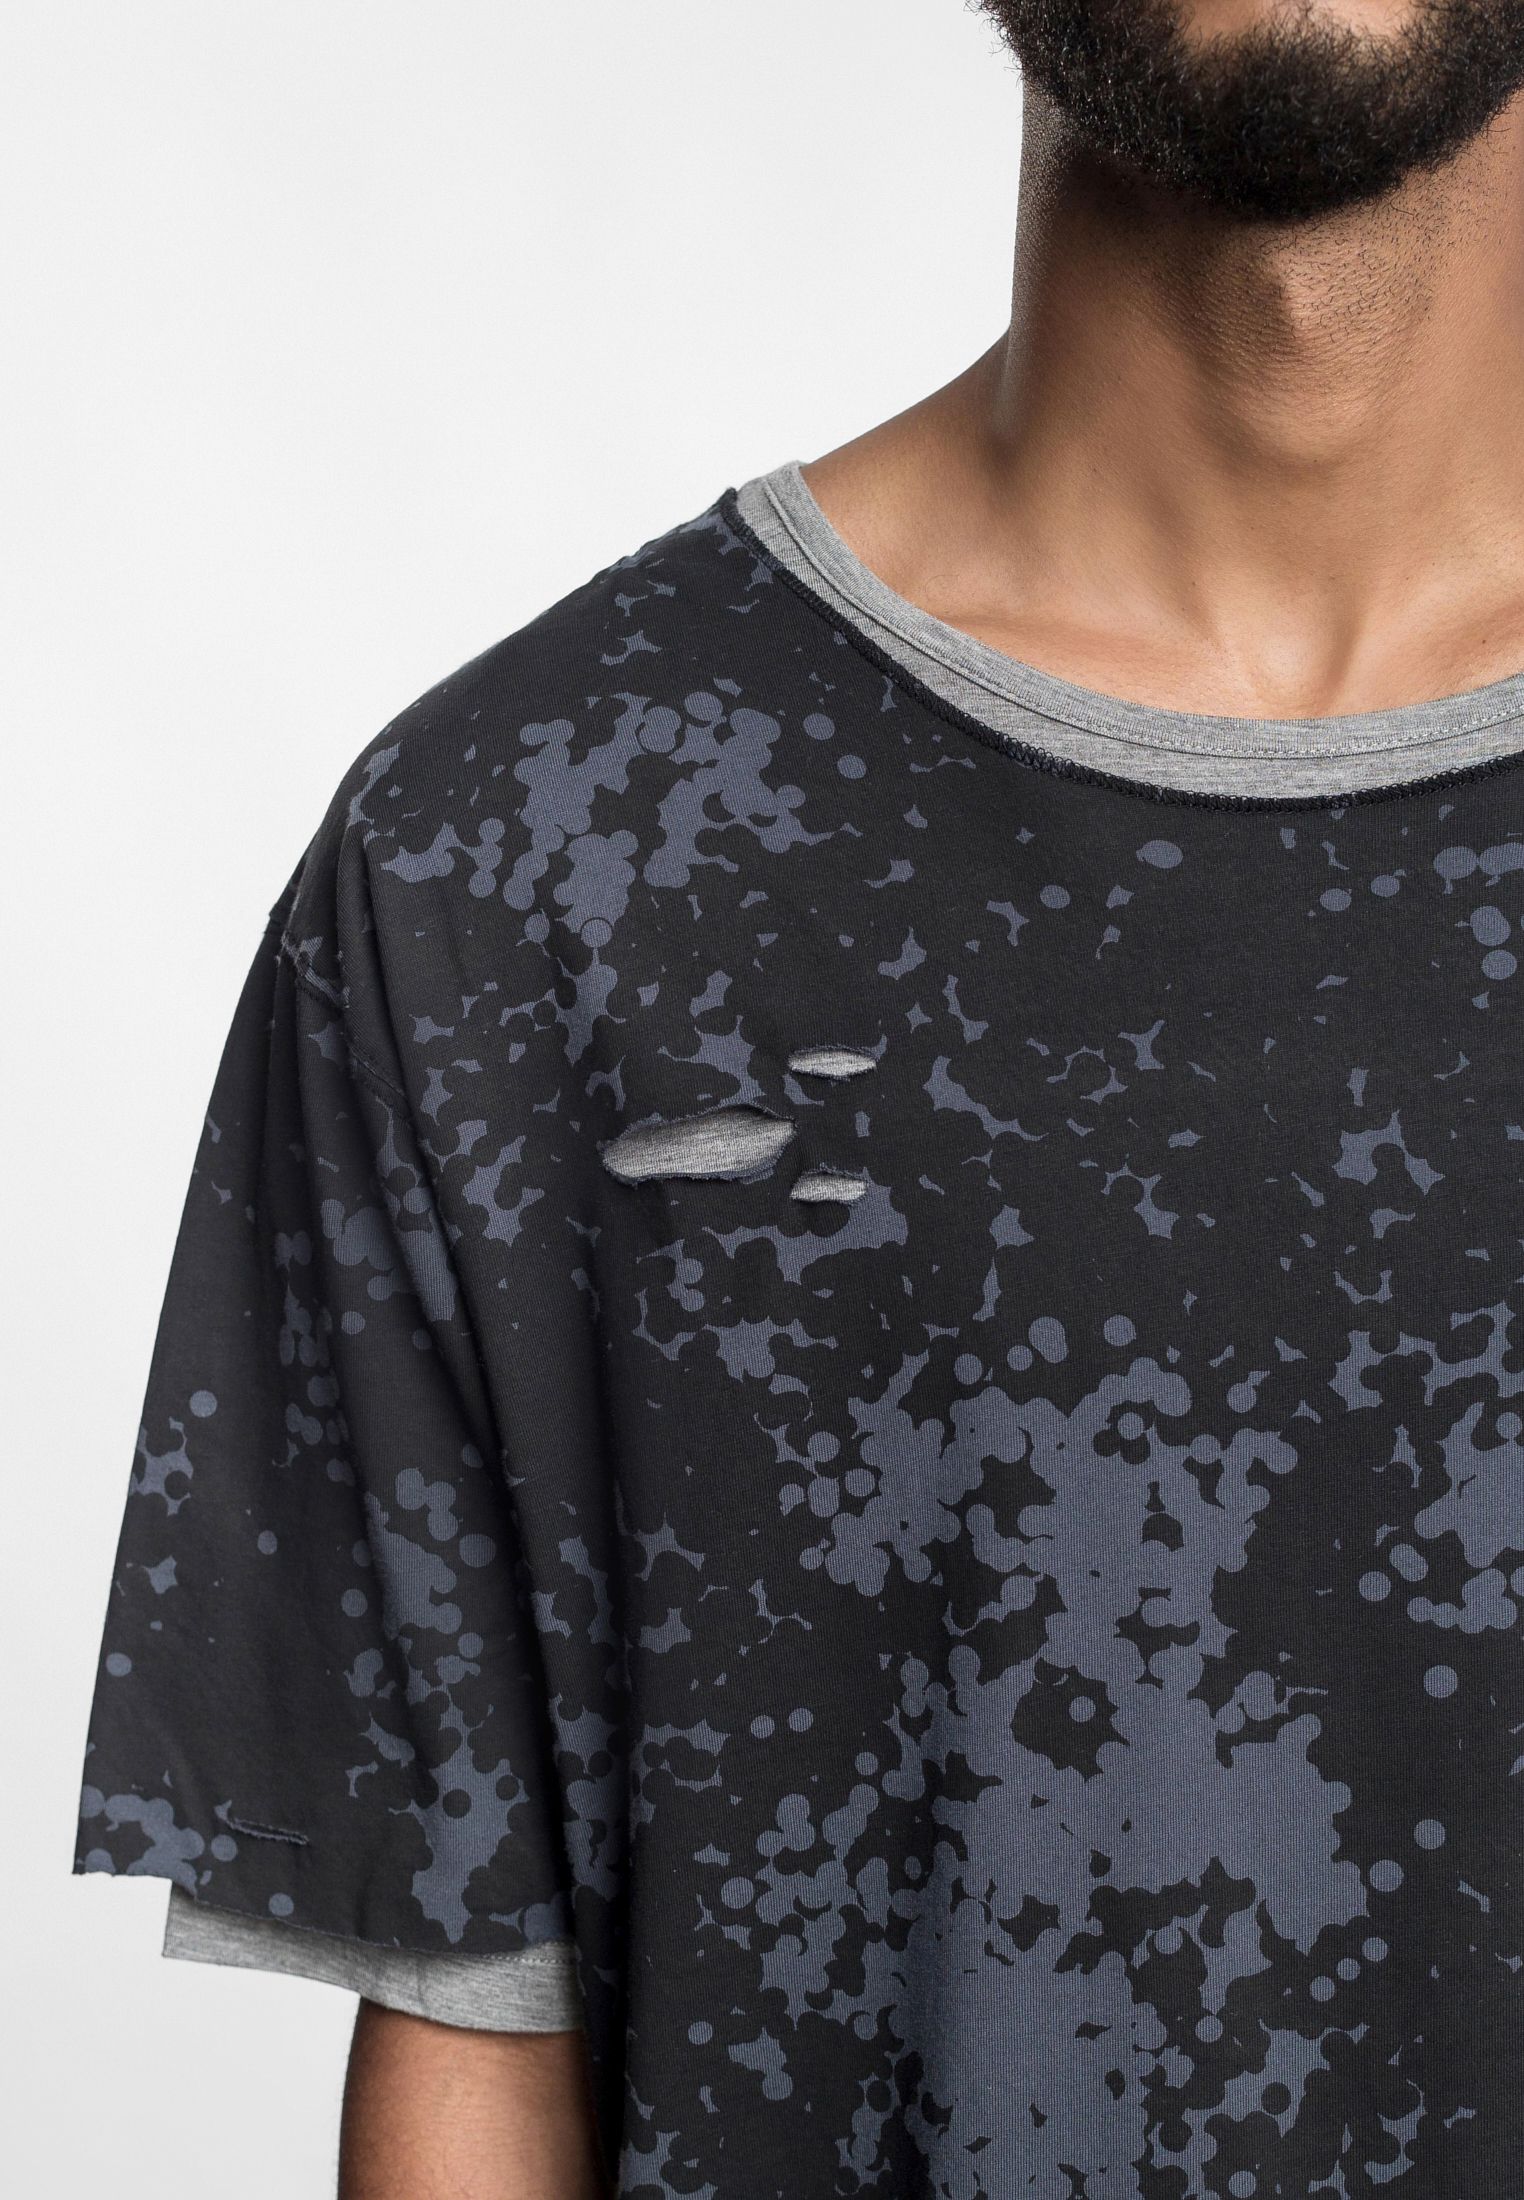 T-Shirts CSBL Deuces Long Layer Tee in Farbe black camo/heather grey